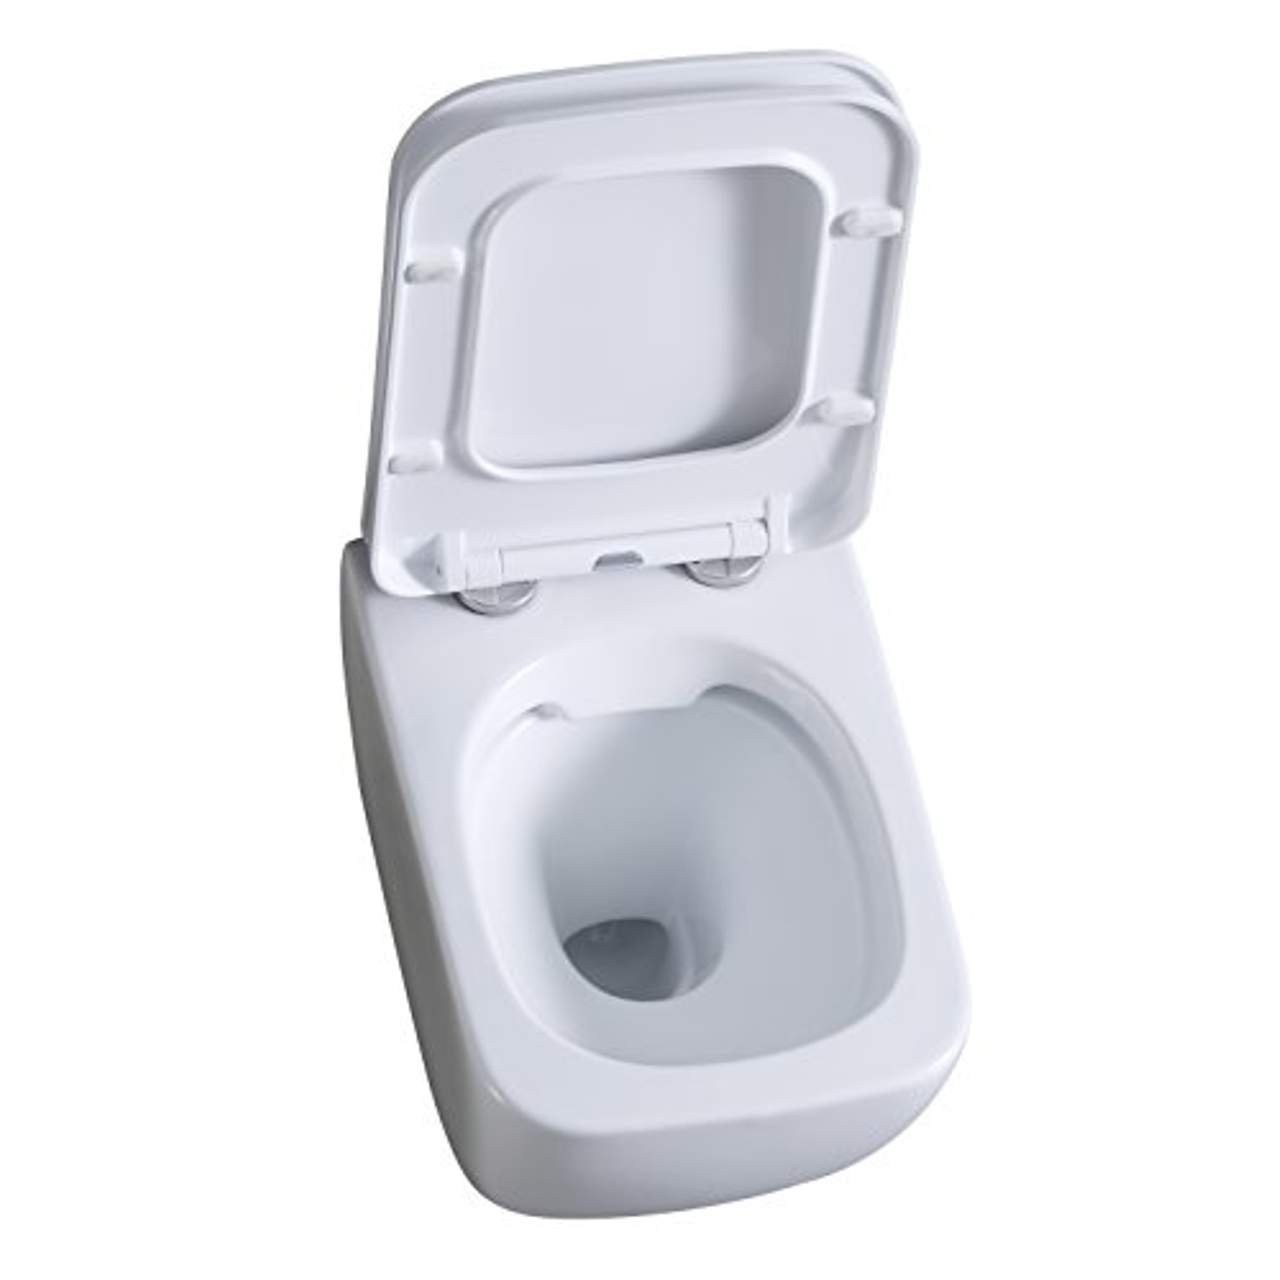 Cube Design Hänge WC spülrandlos Toilette